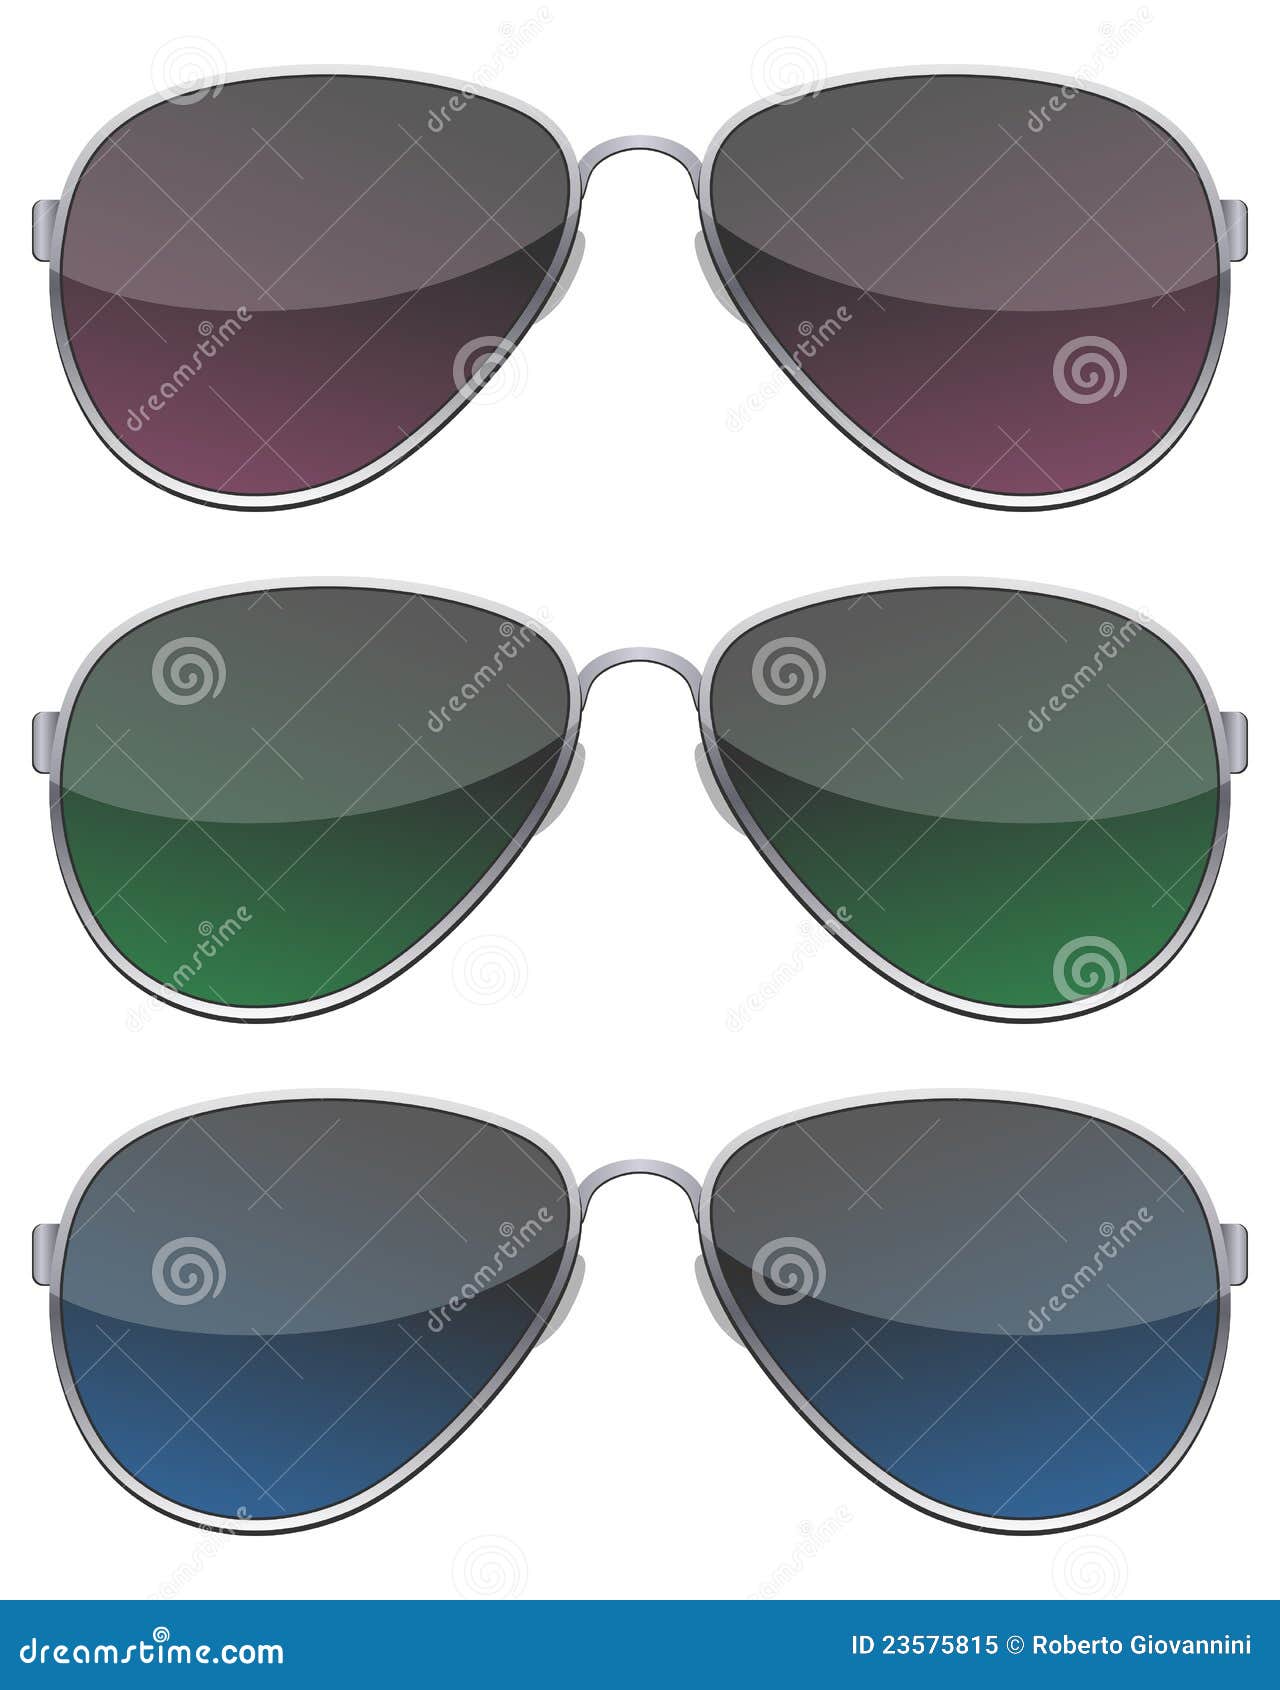 black sunglasses set